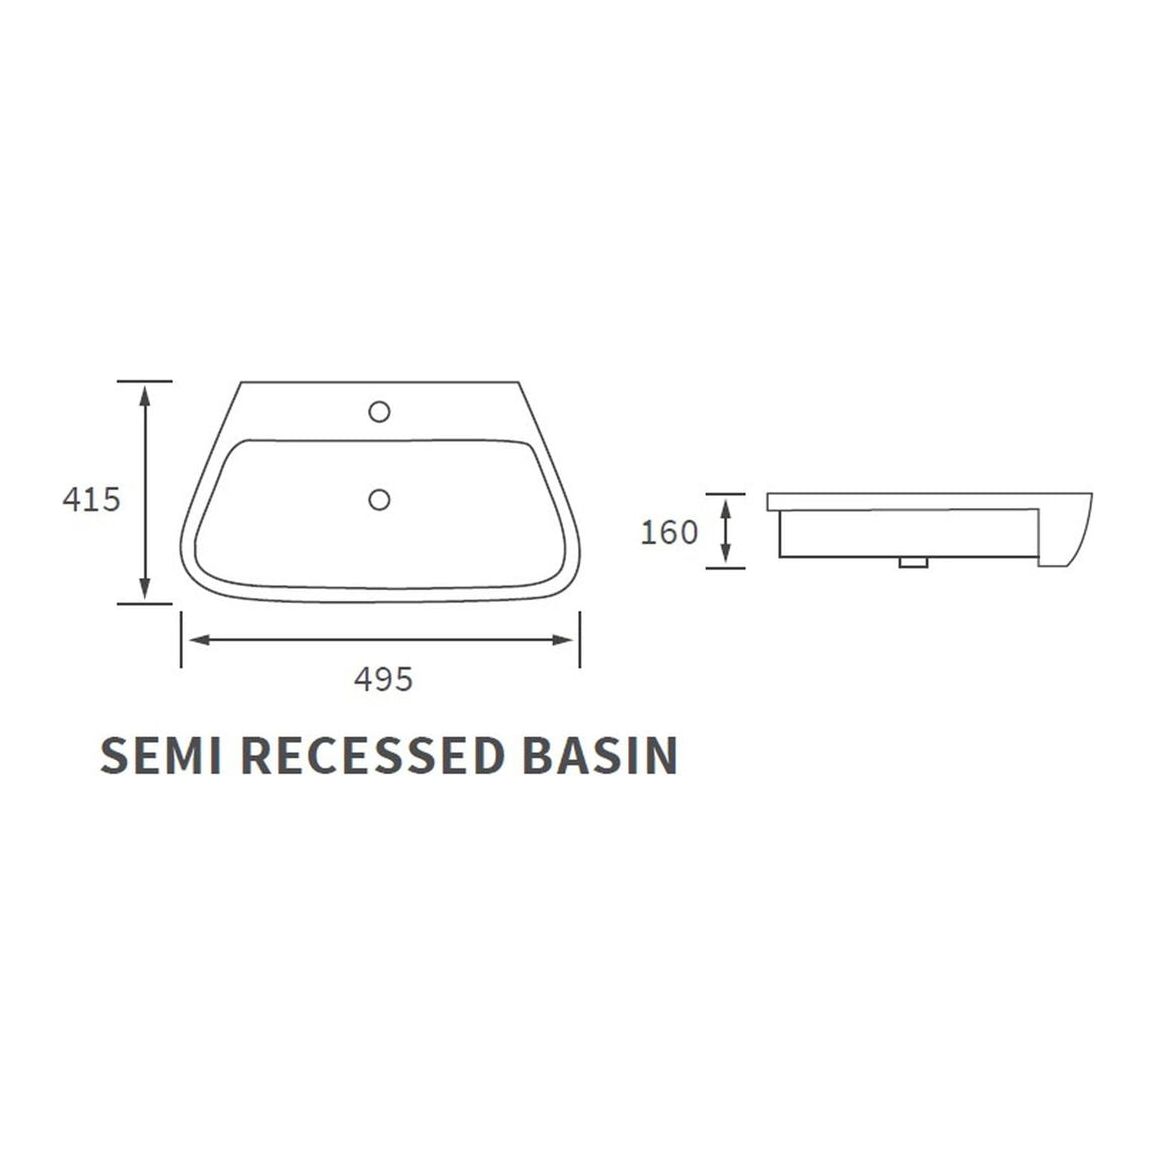 Finima 495x415mm 1TH Semi Recessed Basin